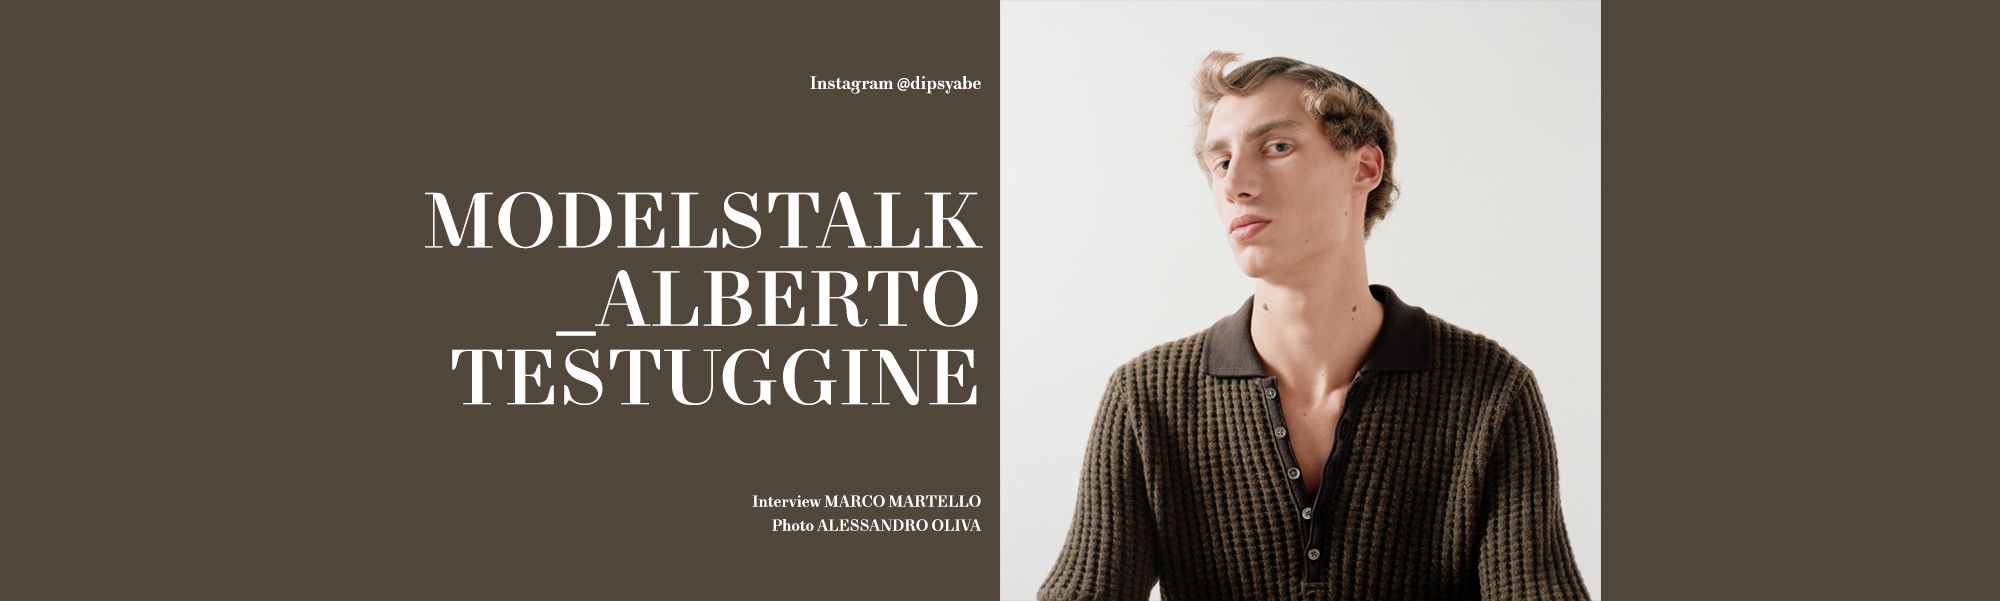 alberto-testuggine-thegreatestmagazine-talking heads-banner